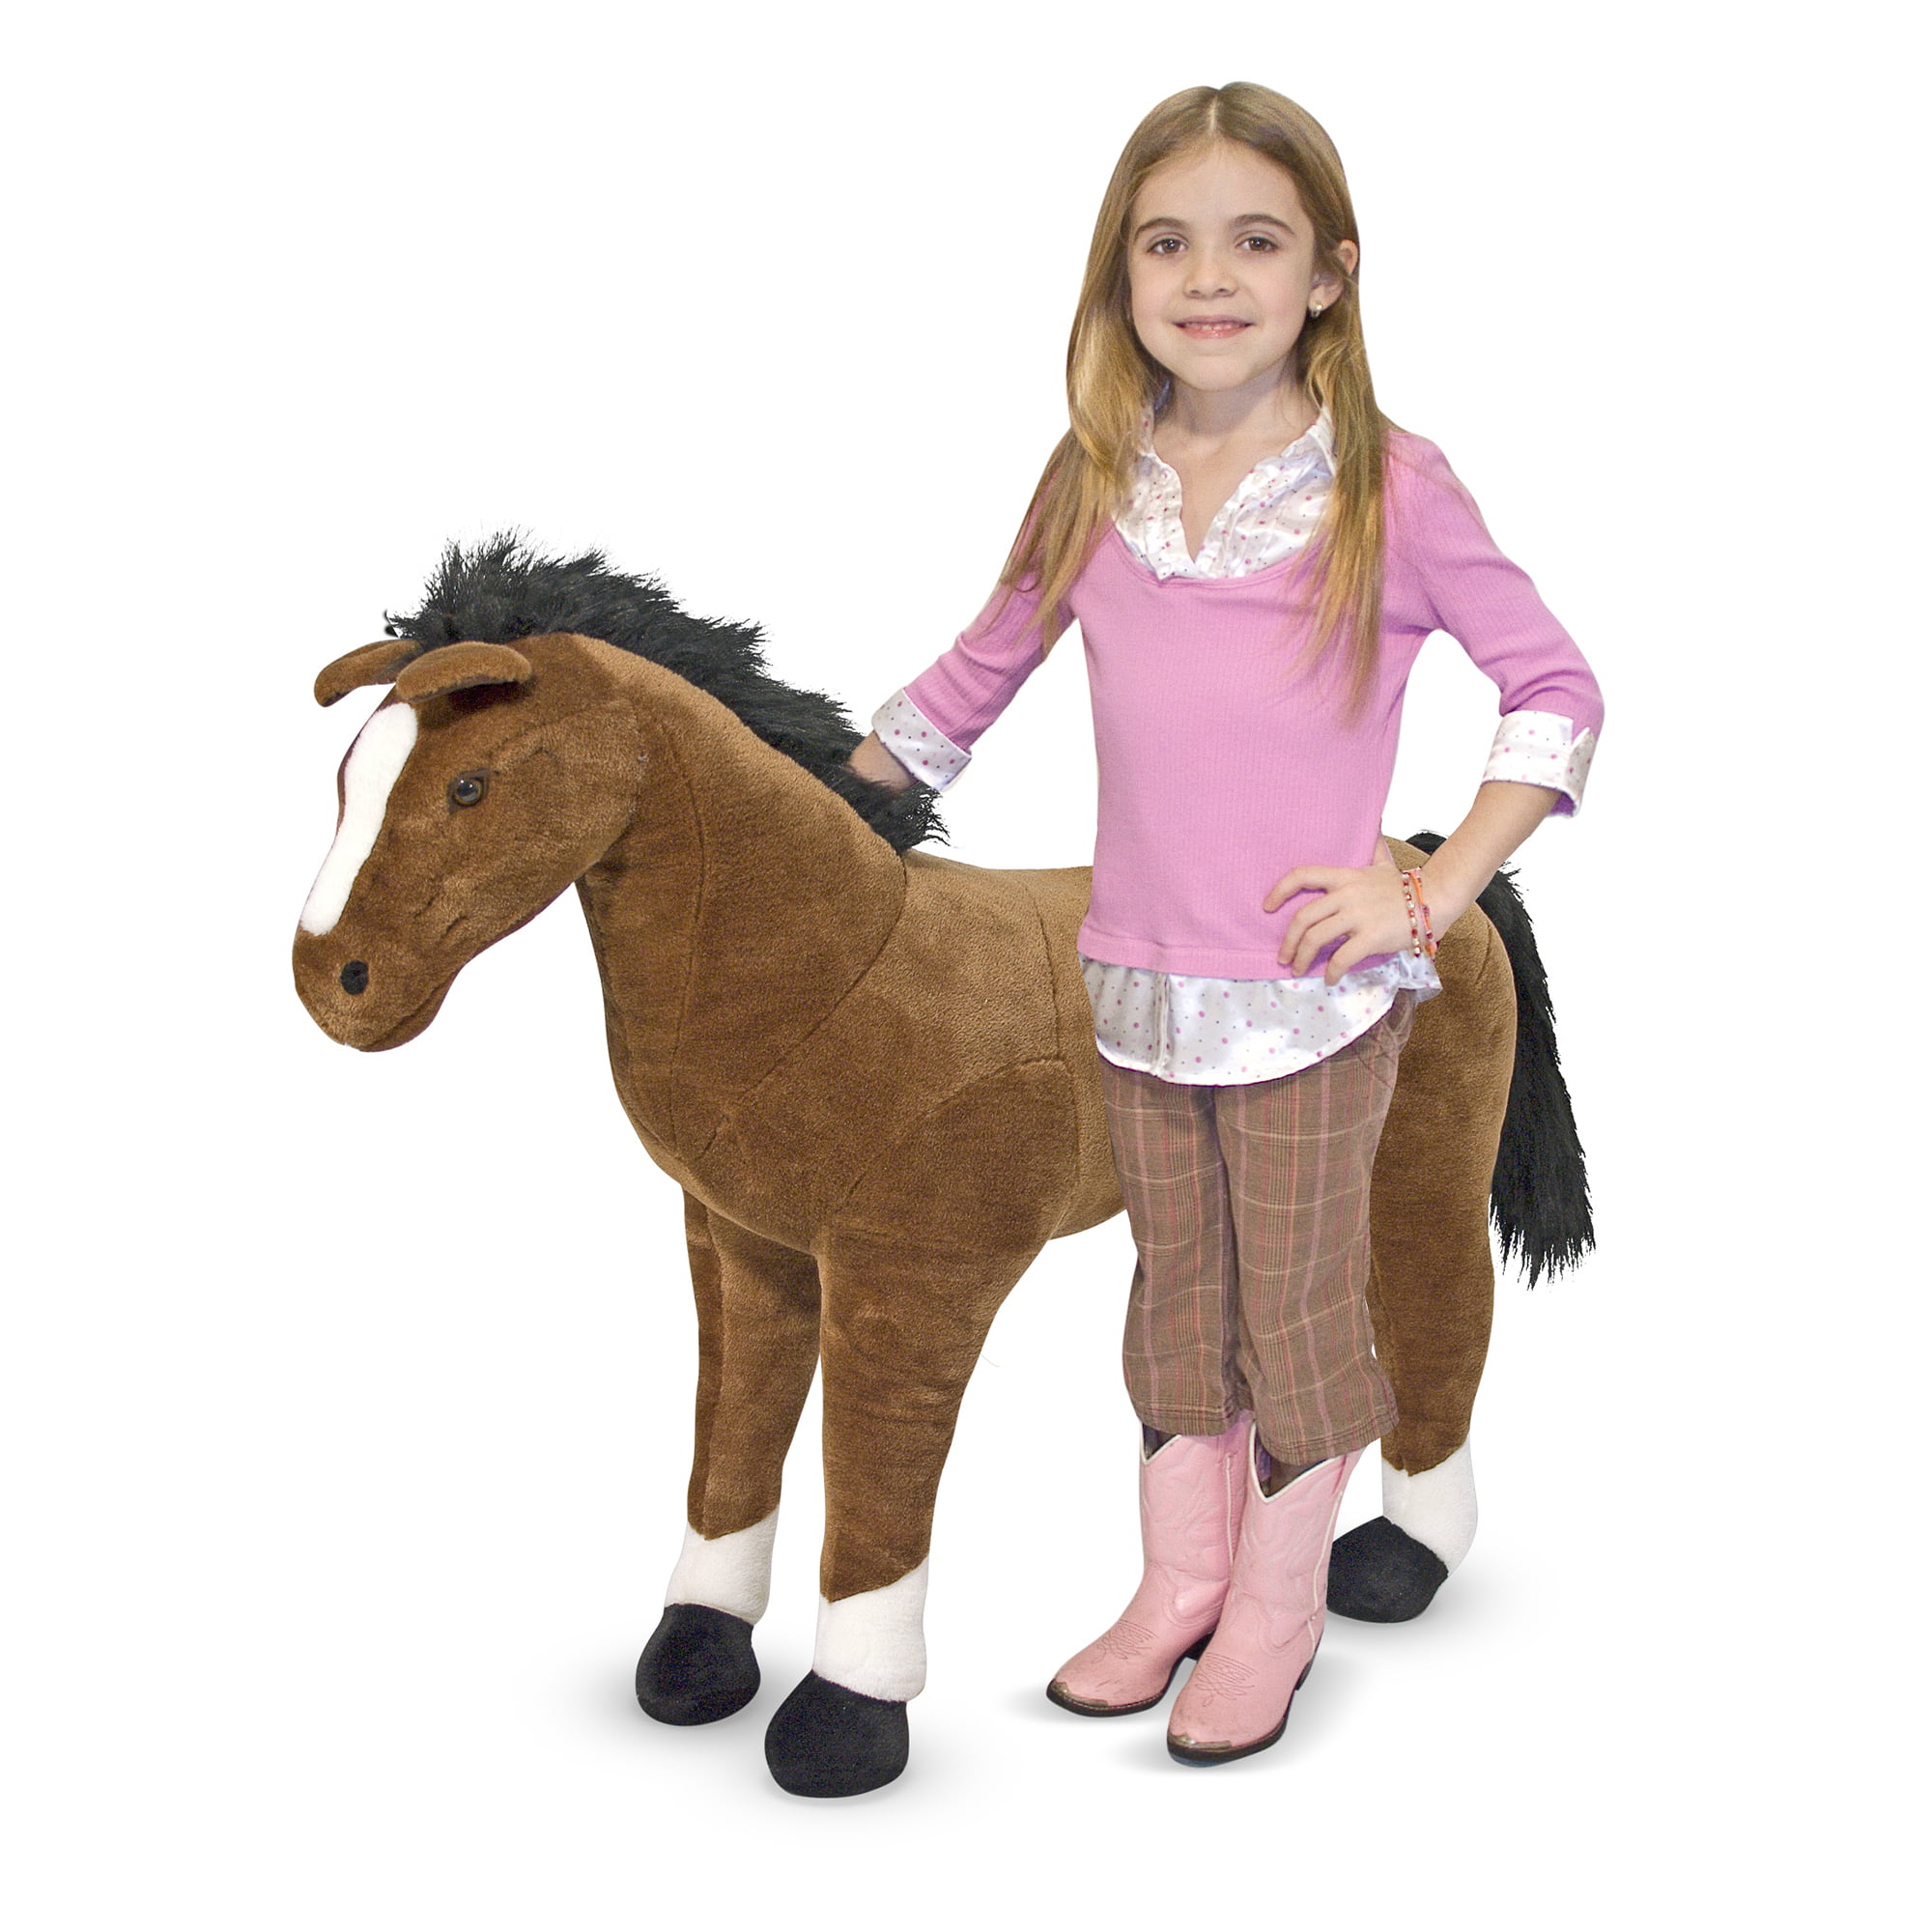 Melissa & Doug Giant Brown Horse Plush Soft Toy Gift for Children Kids 